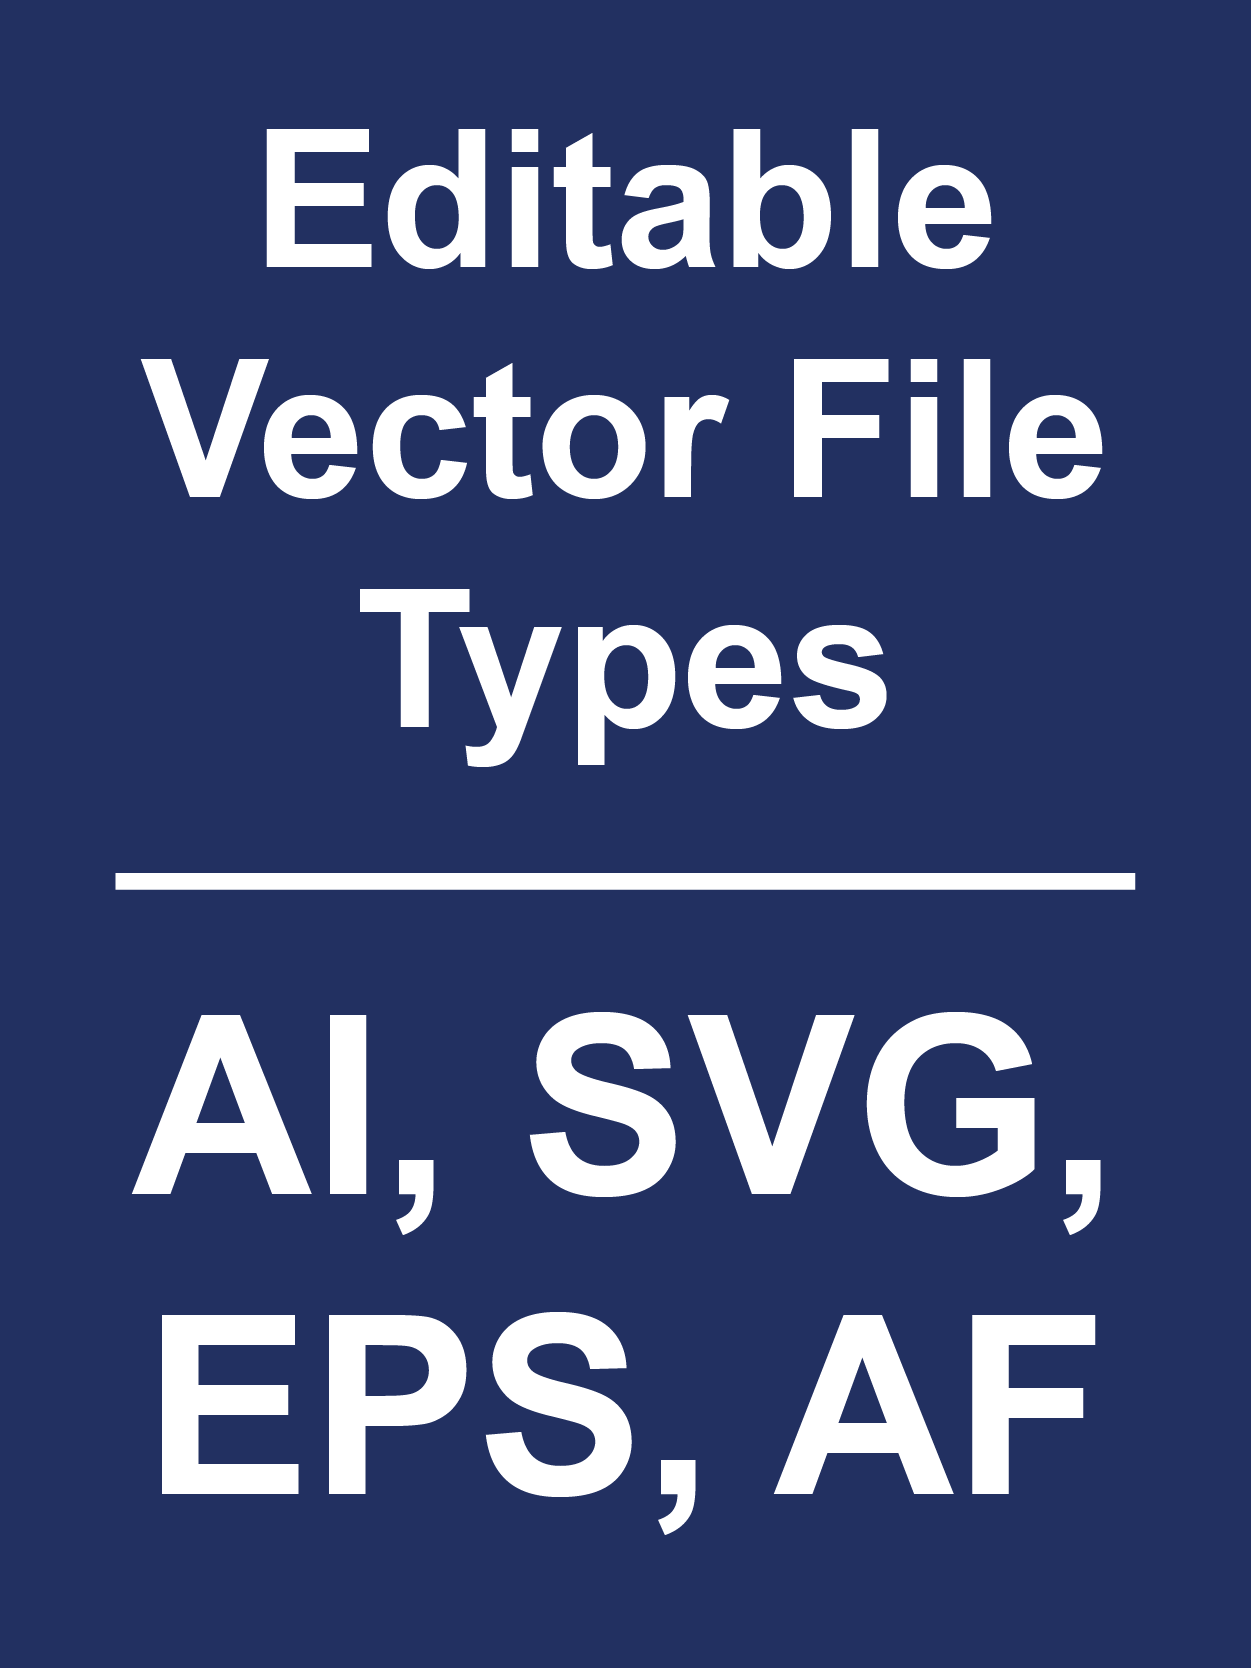 Editable vector file type summary